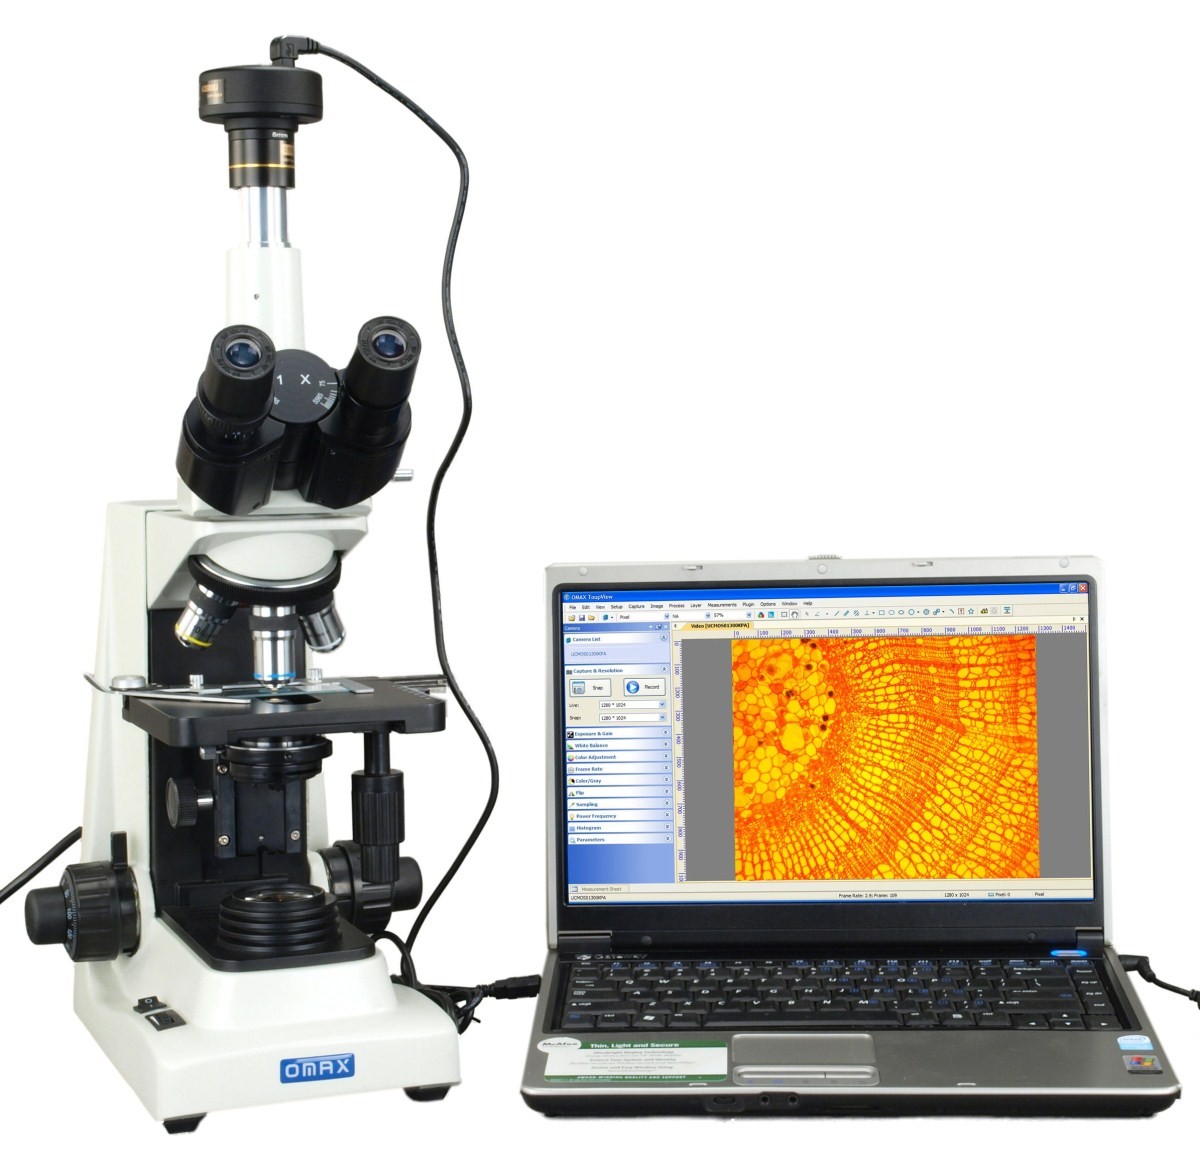 juision digital microscope software download